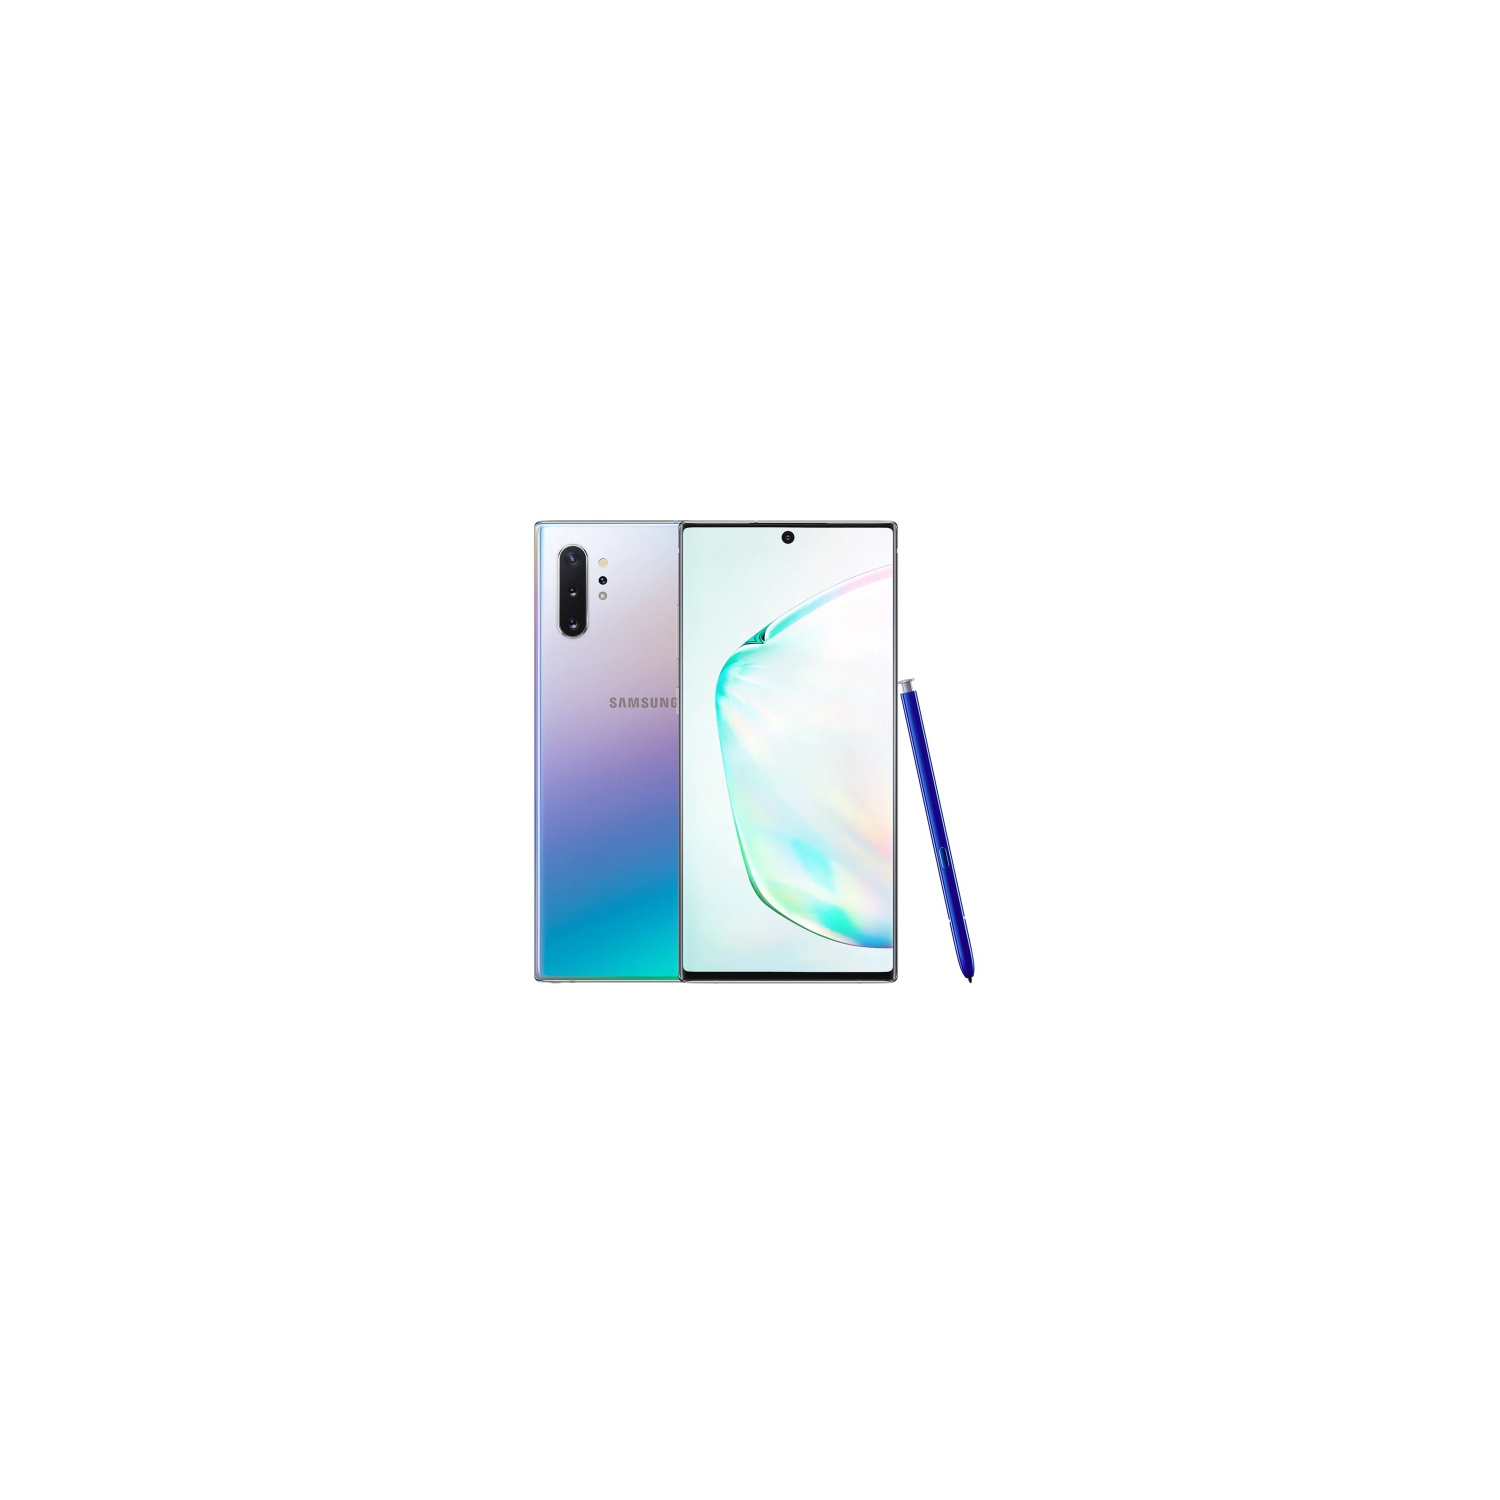 Refurbished (Good) Samsung Galaxy Note 10+ Plus 256GB Smartphone - Aura Glow - Unlocked